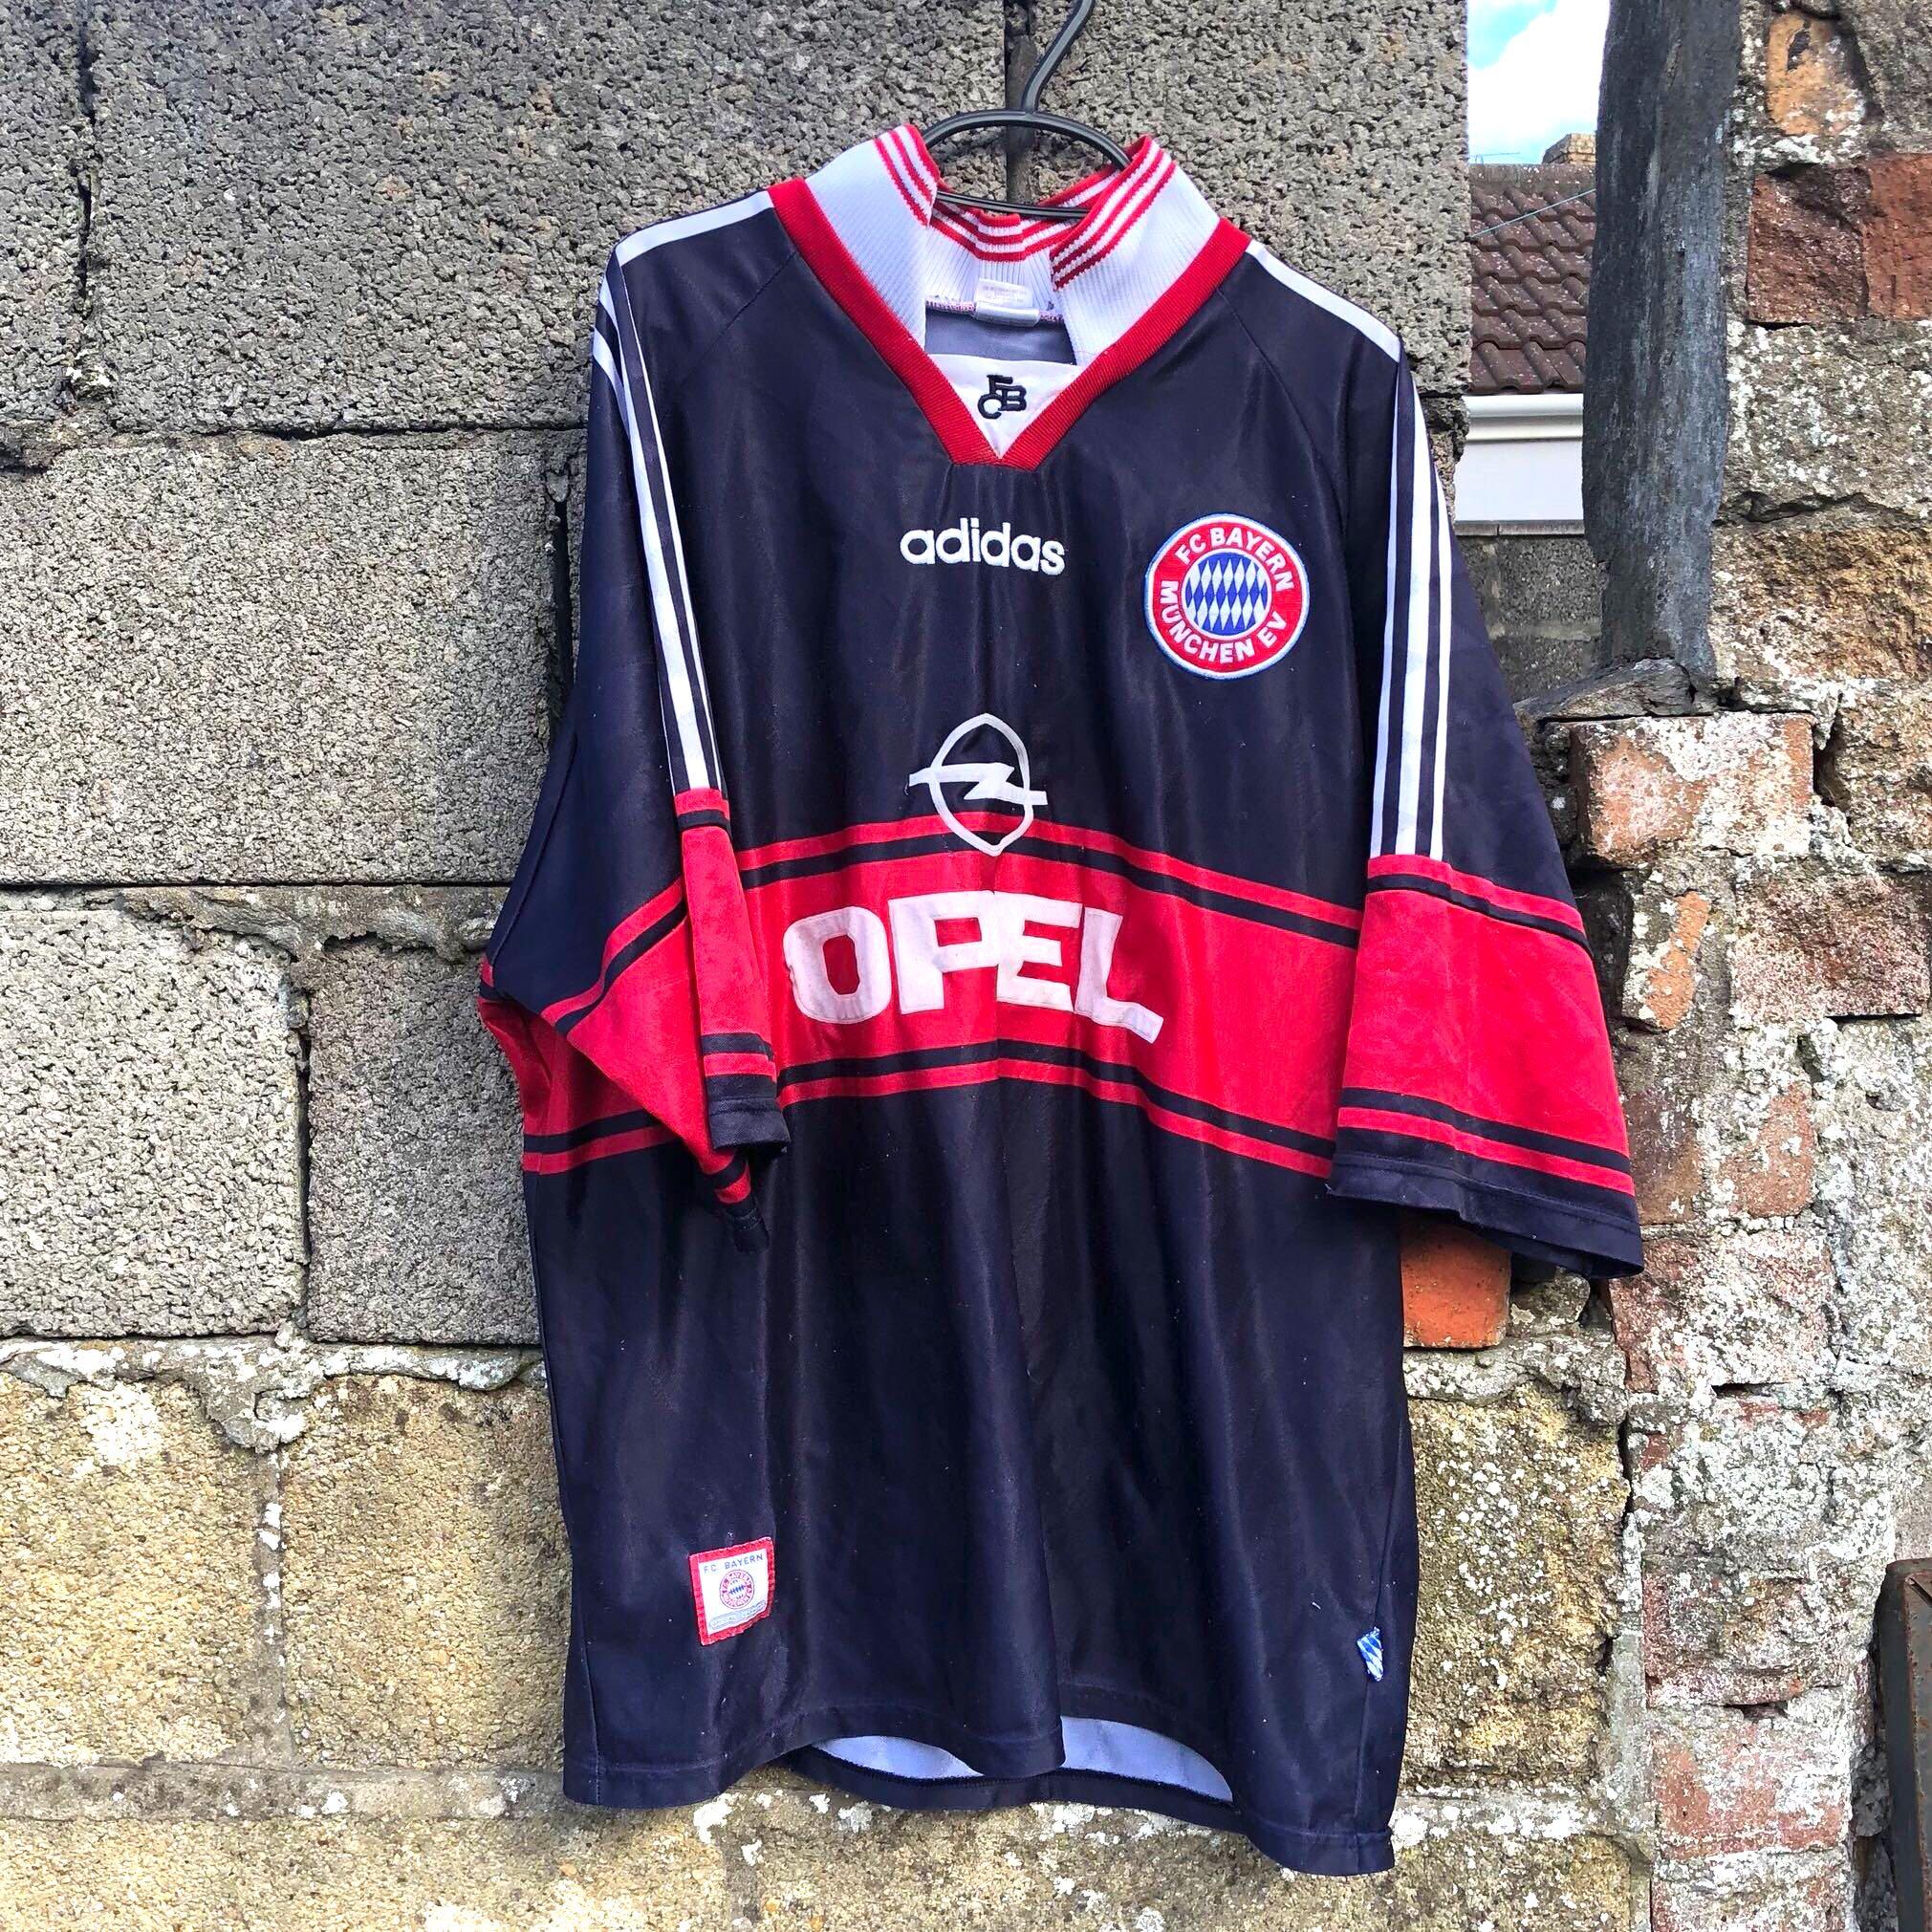 1997 1998 Bayern Munich German Bundesliga Vintage Authentic Original Adidas Home Football Soccer Jersey Shirt Rare 97 98 Lizarazu Kahn Jancker Hamann Scholl Men S Fashion Clothes Tops On Carousell